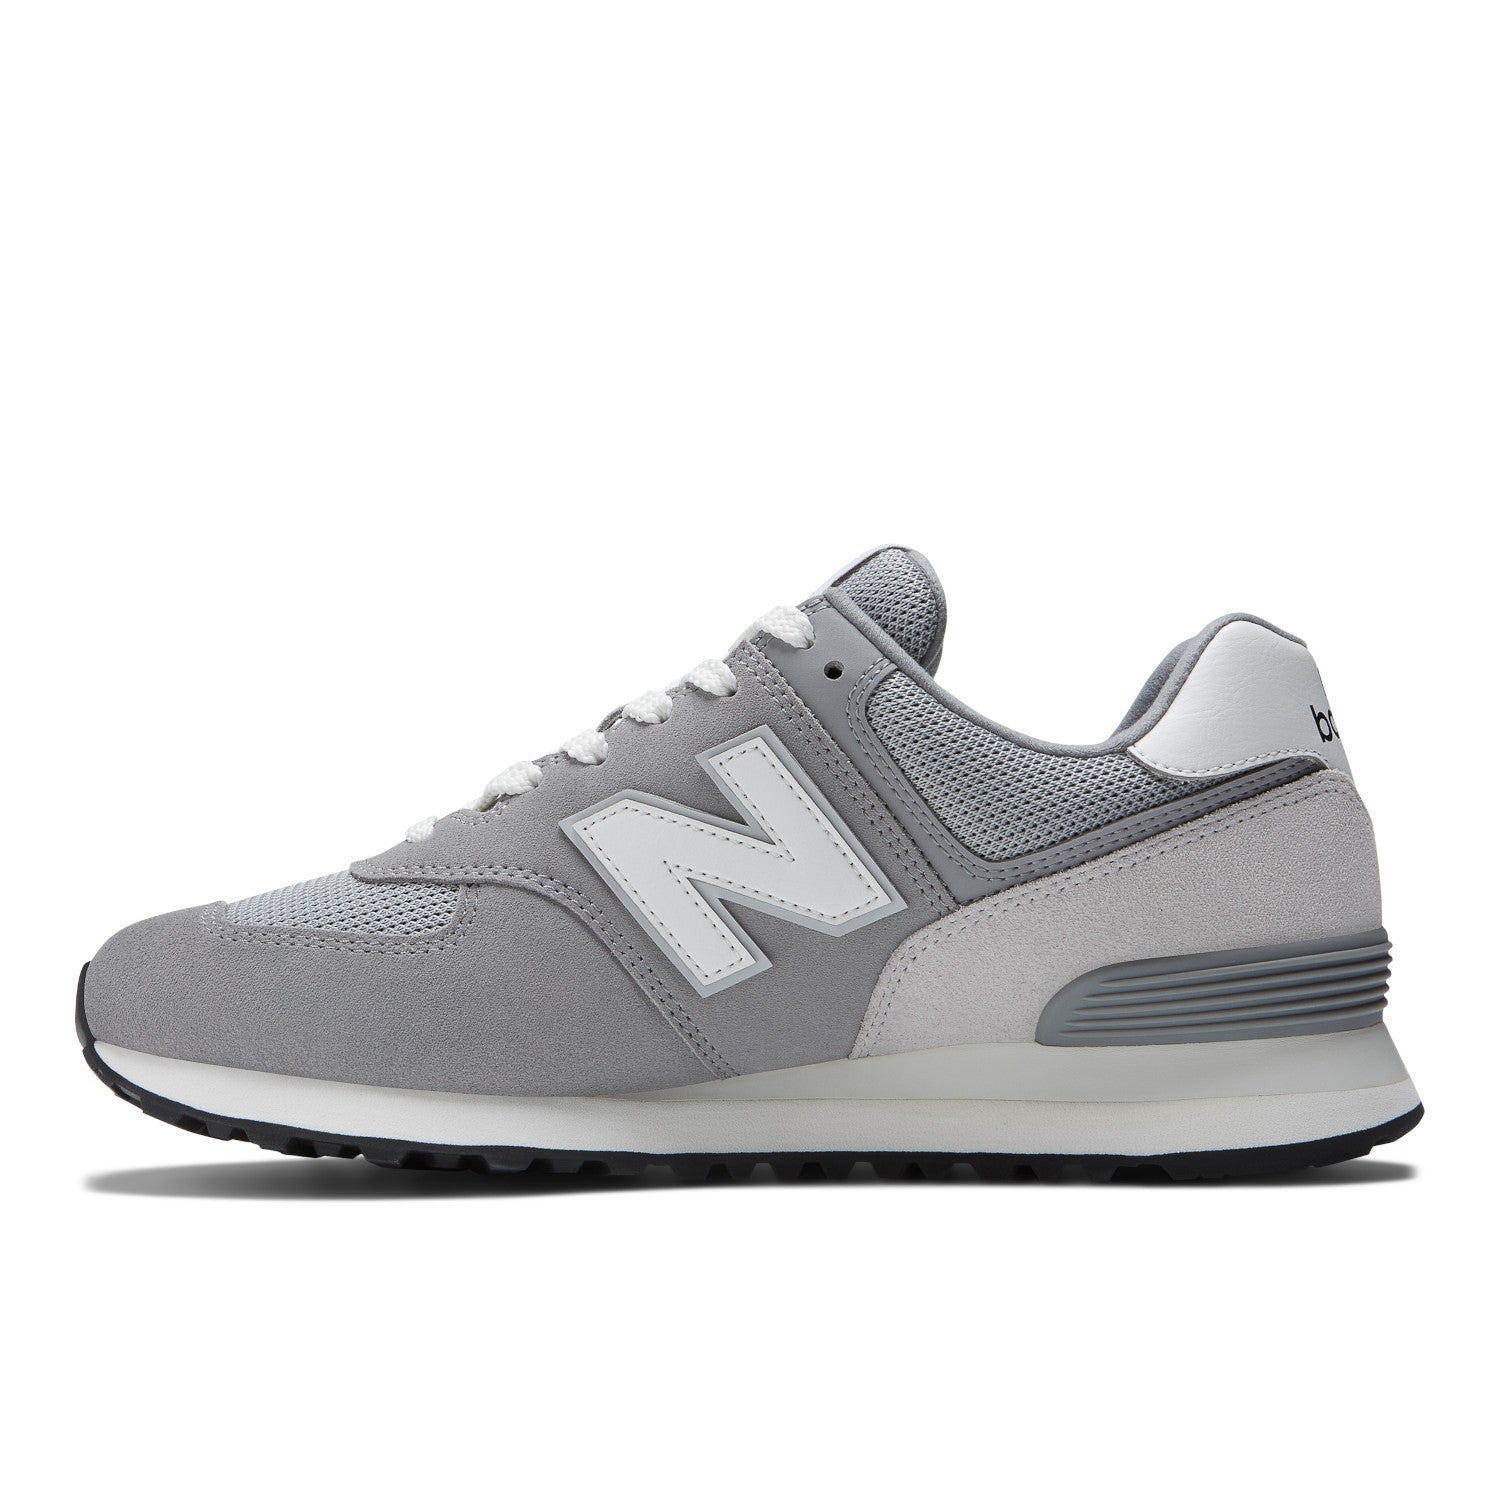 New Balance 574 Color: Grey